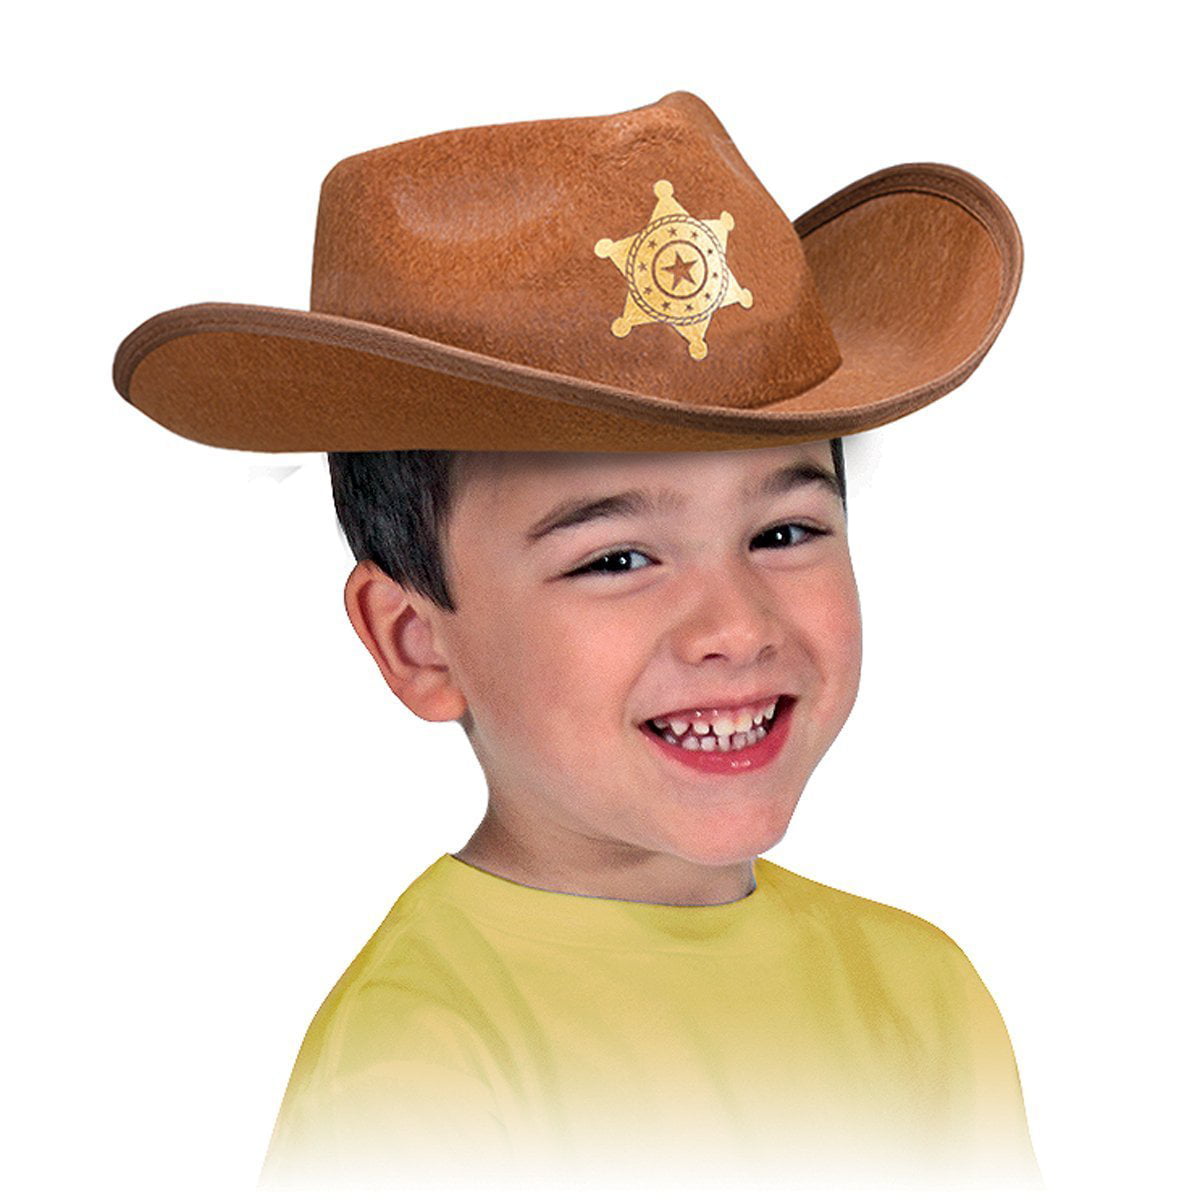 Hat playing. Шляпка для мальчика. Детские шляпы. Детские шляпы для мальчиков. Оригинальная шляпа для мальчика.